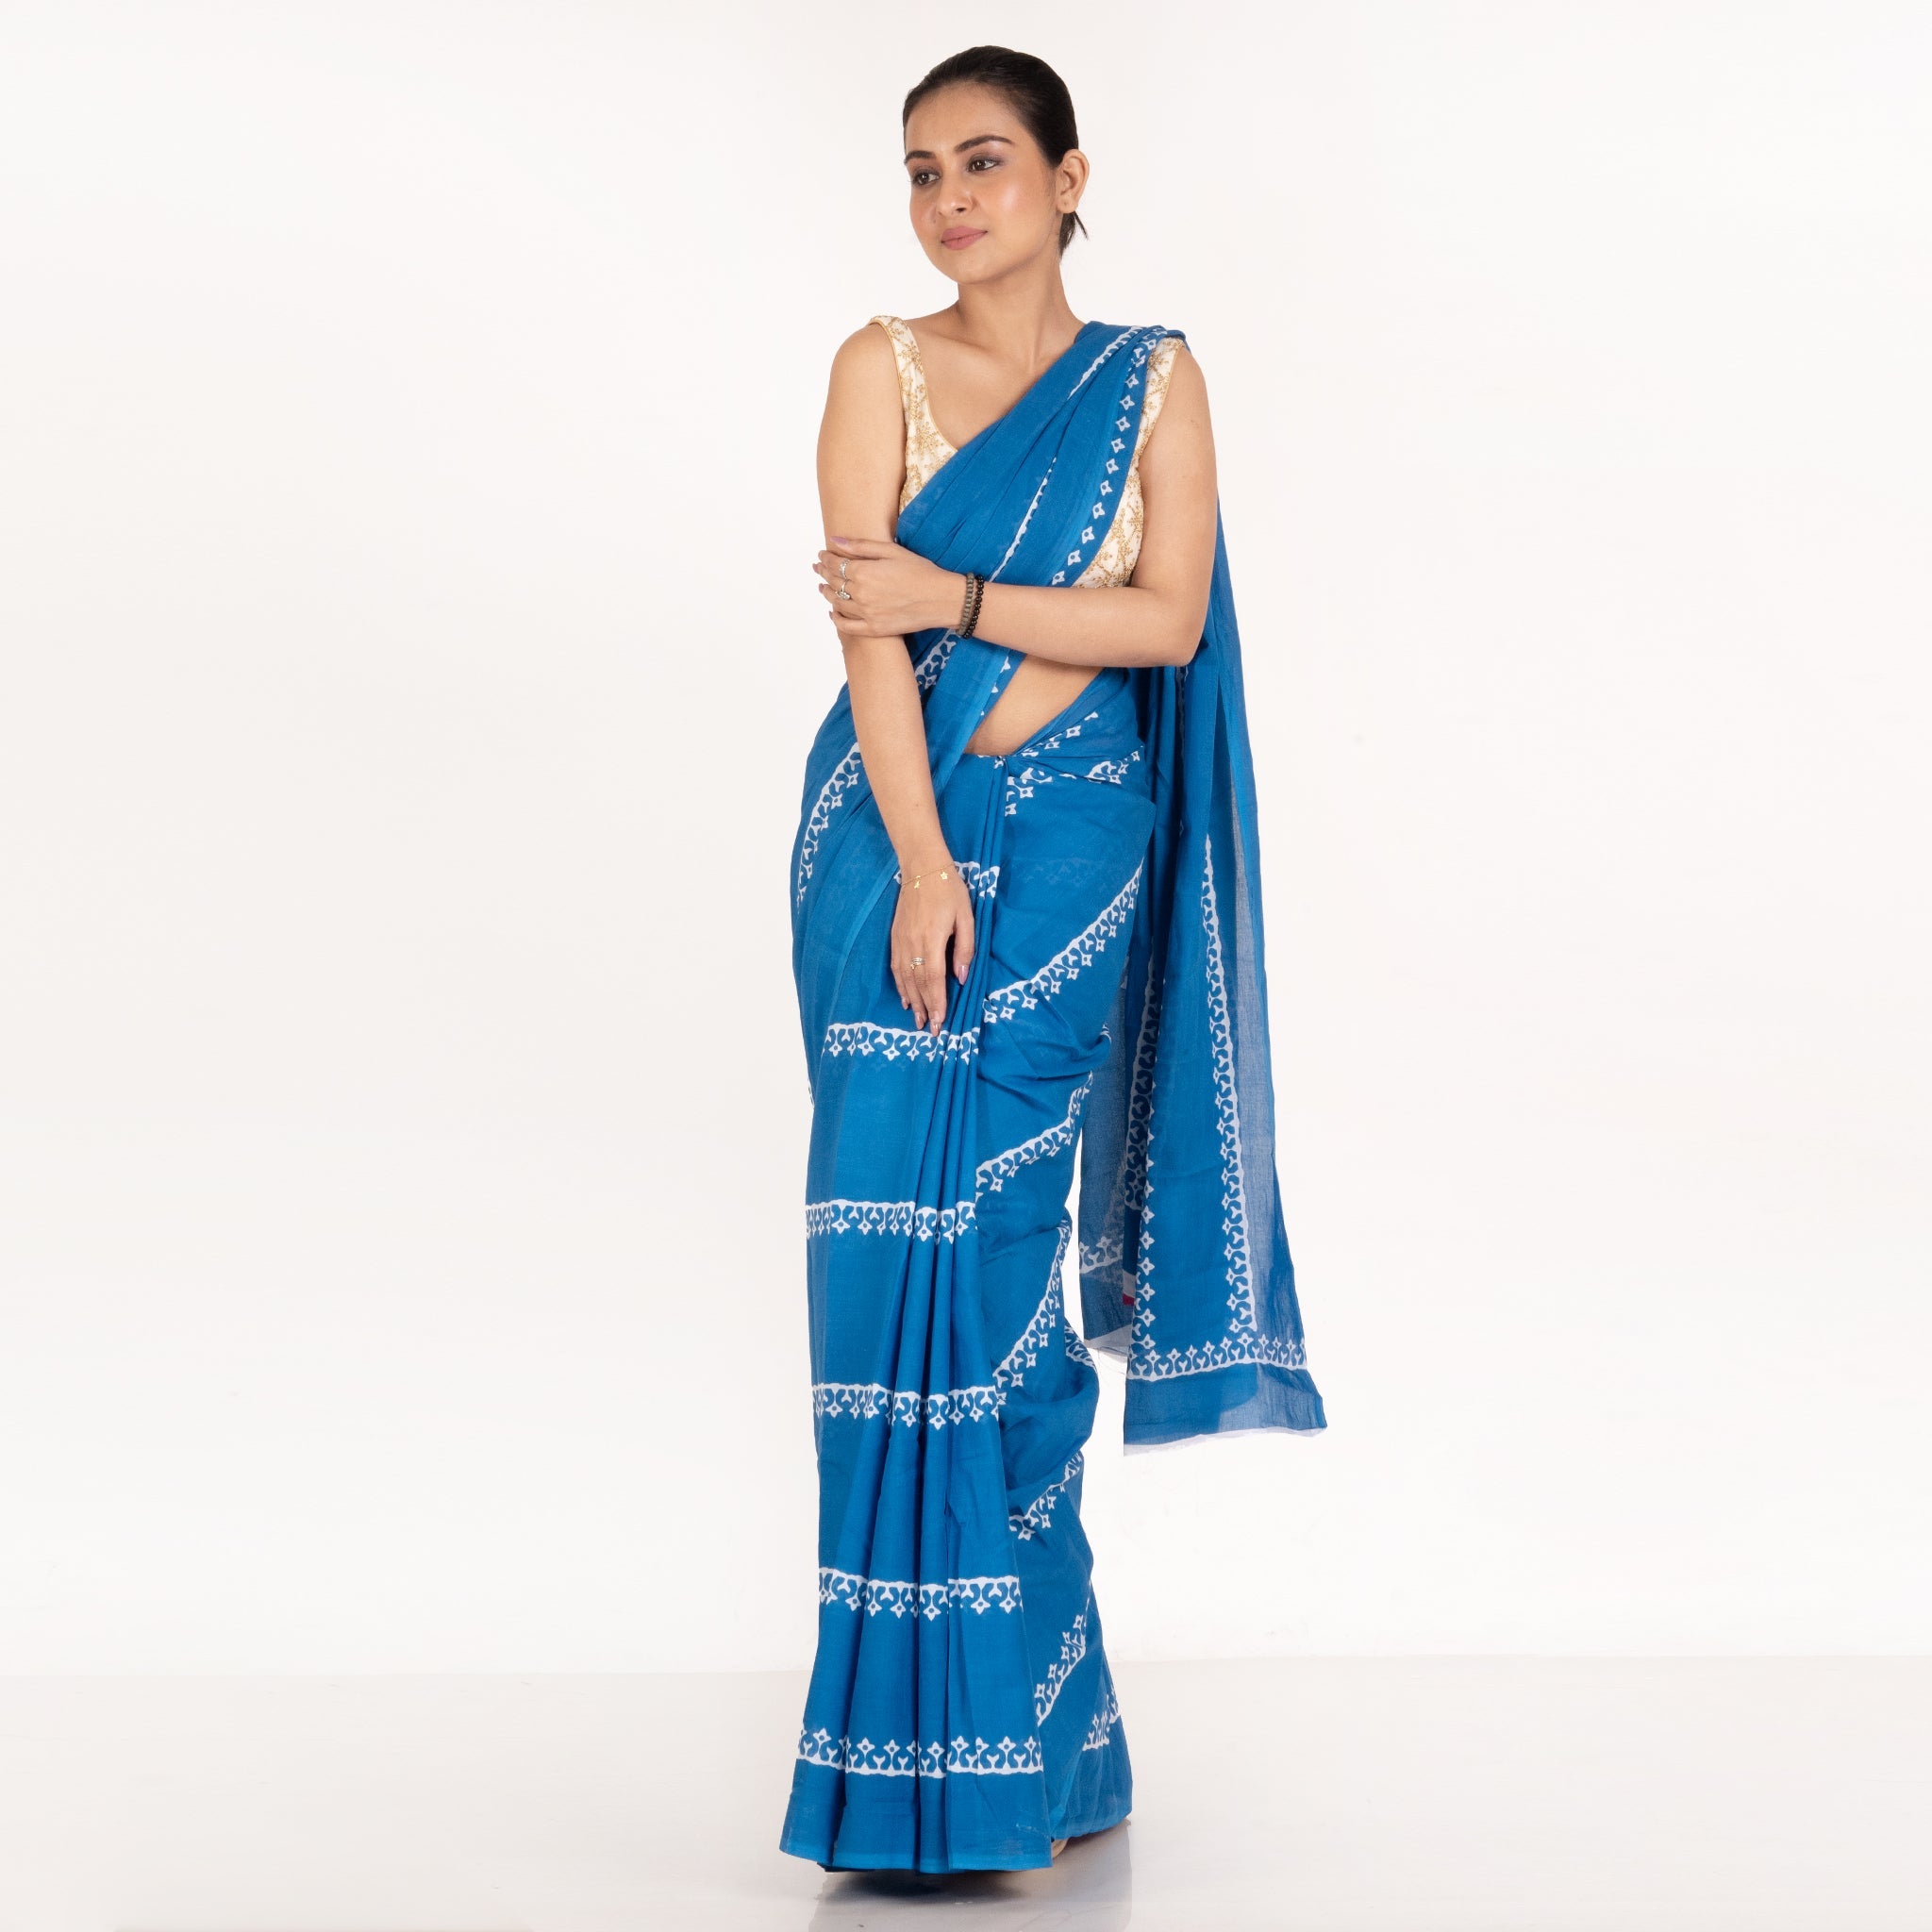 Women's Blue Handloom Bagru Malmal Saree With White Prints - Boveee